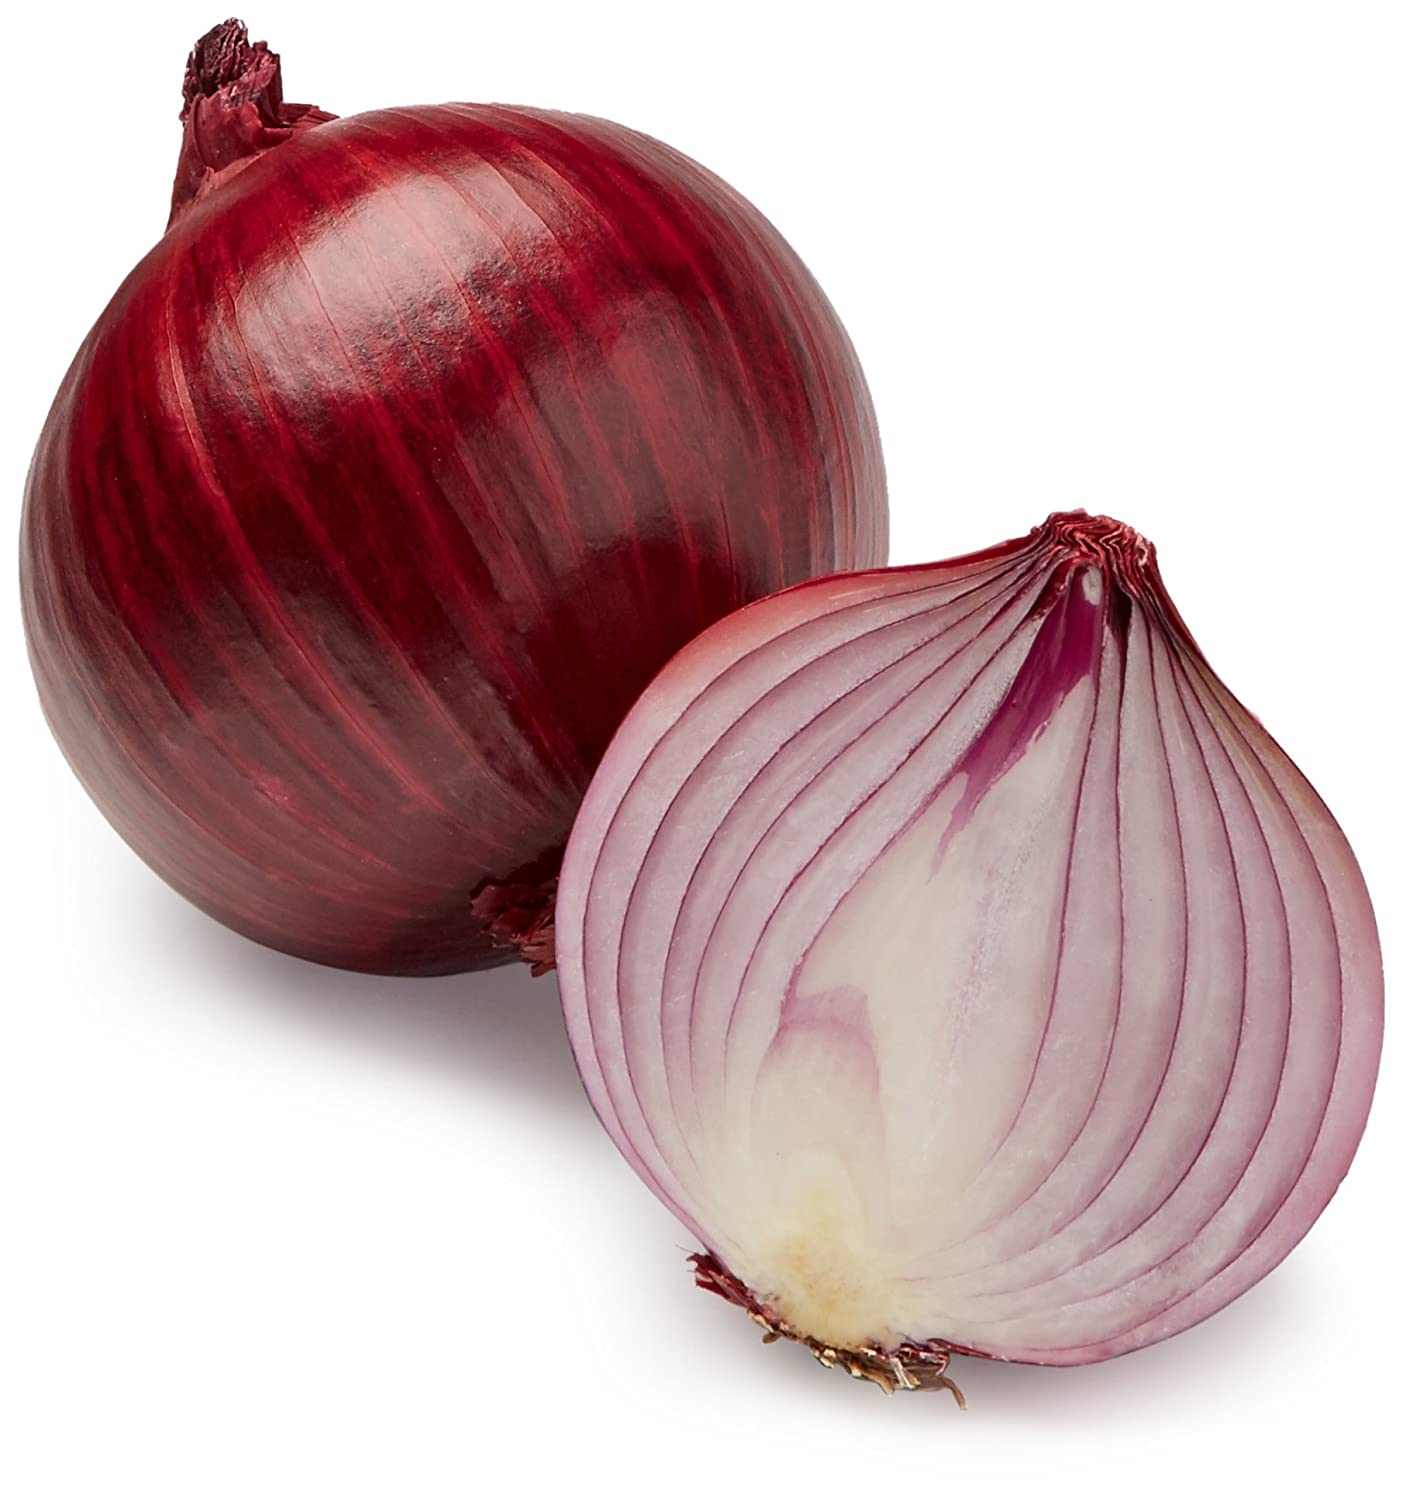 Red Onion - Tu Super To Go